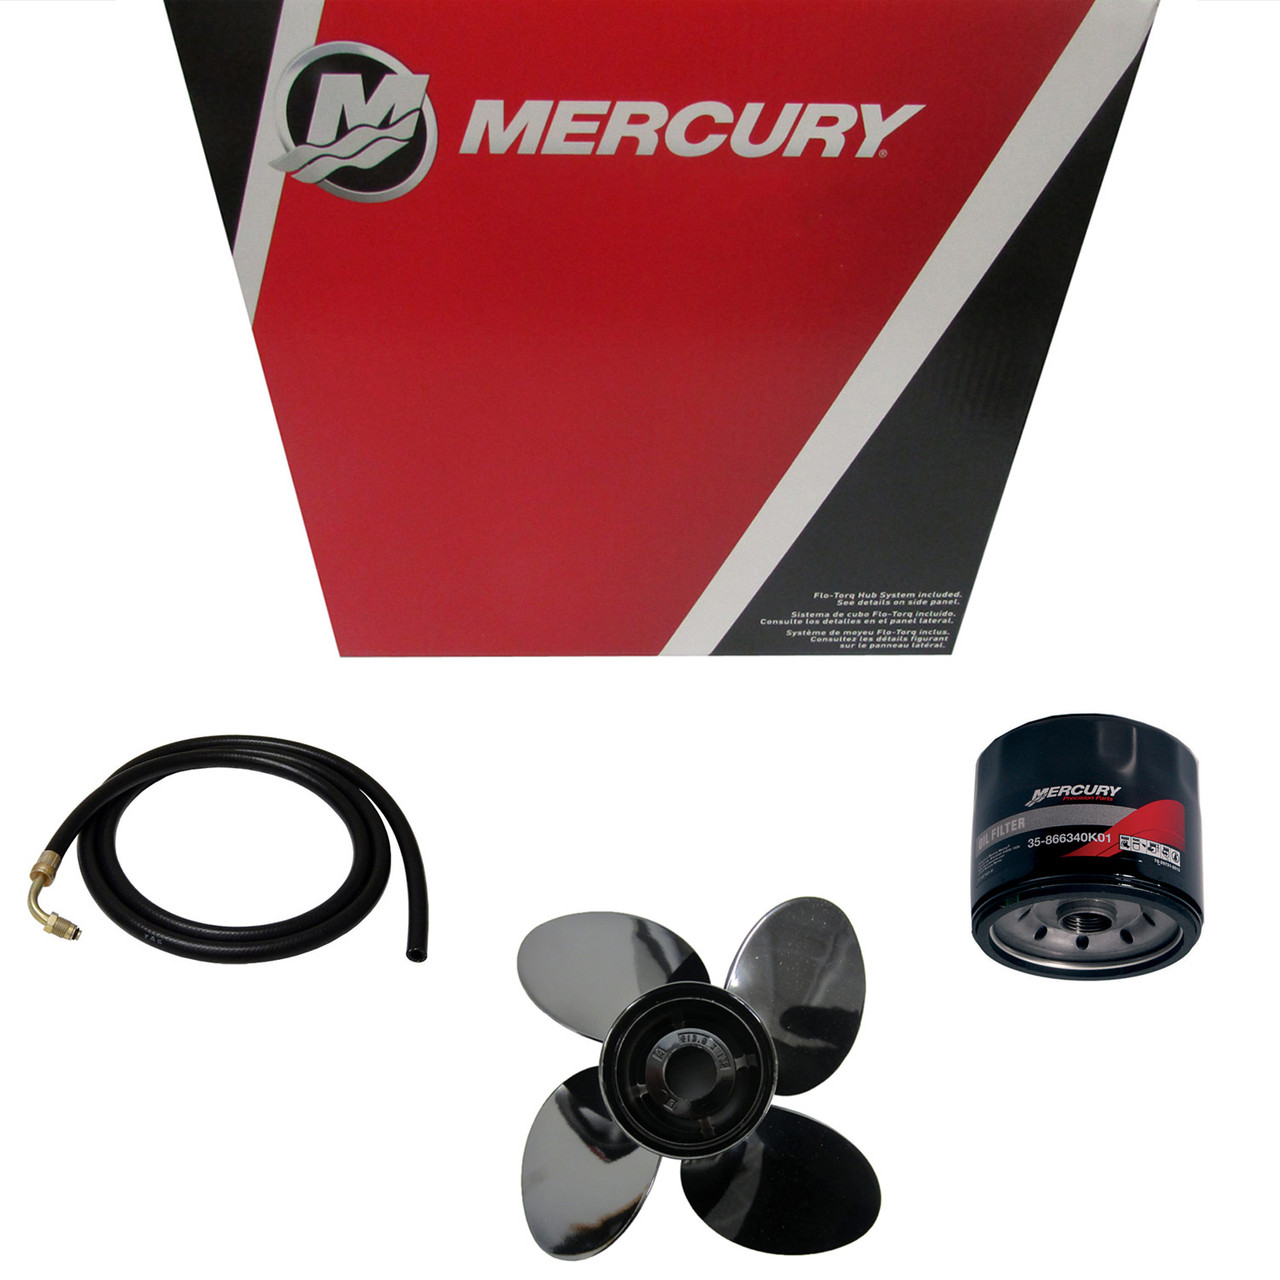 Mercury Marine / Mercruiser New OEM Line-Oil, 32-806634T